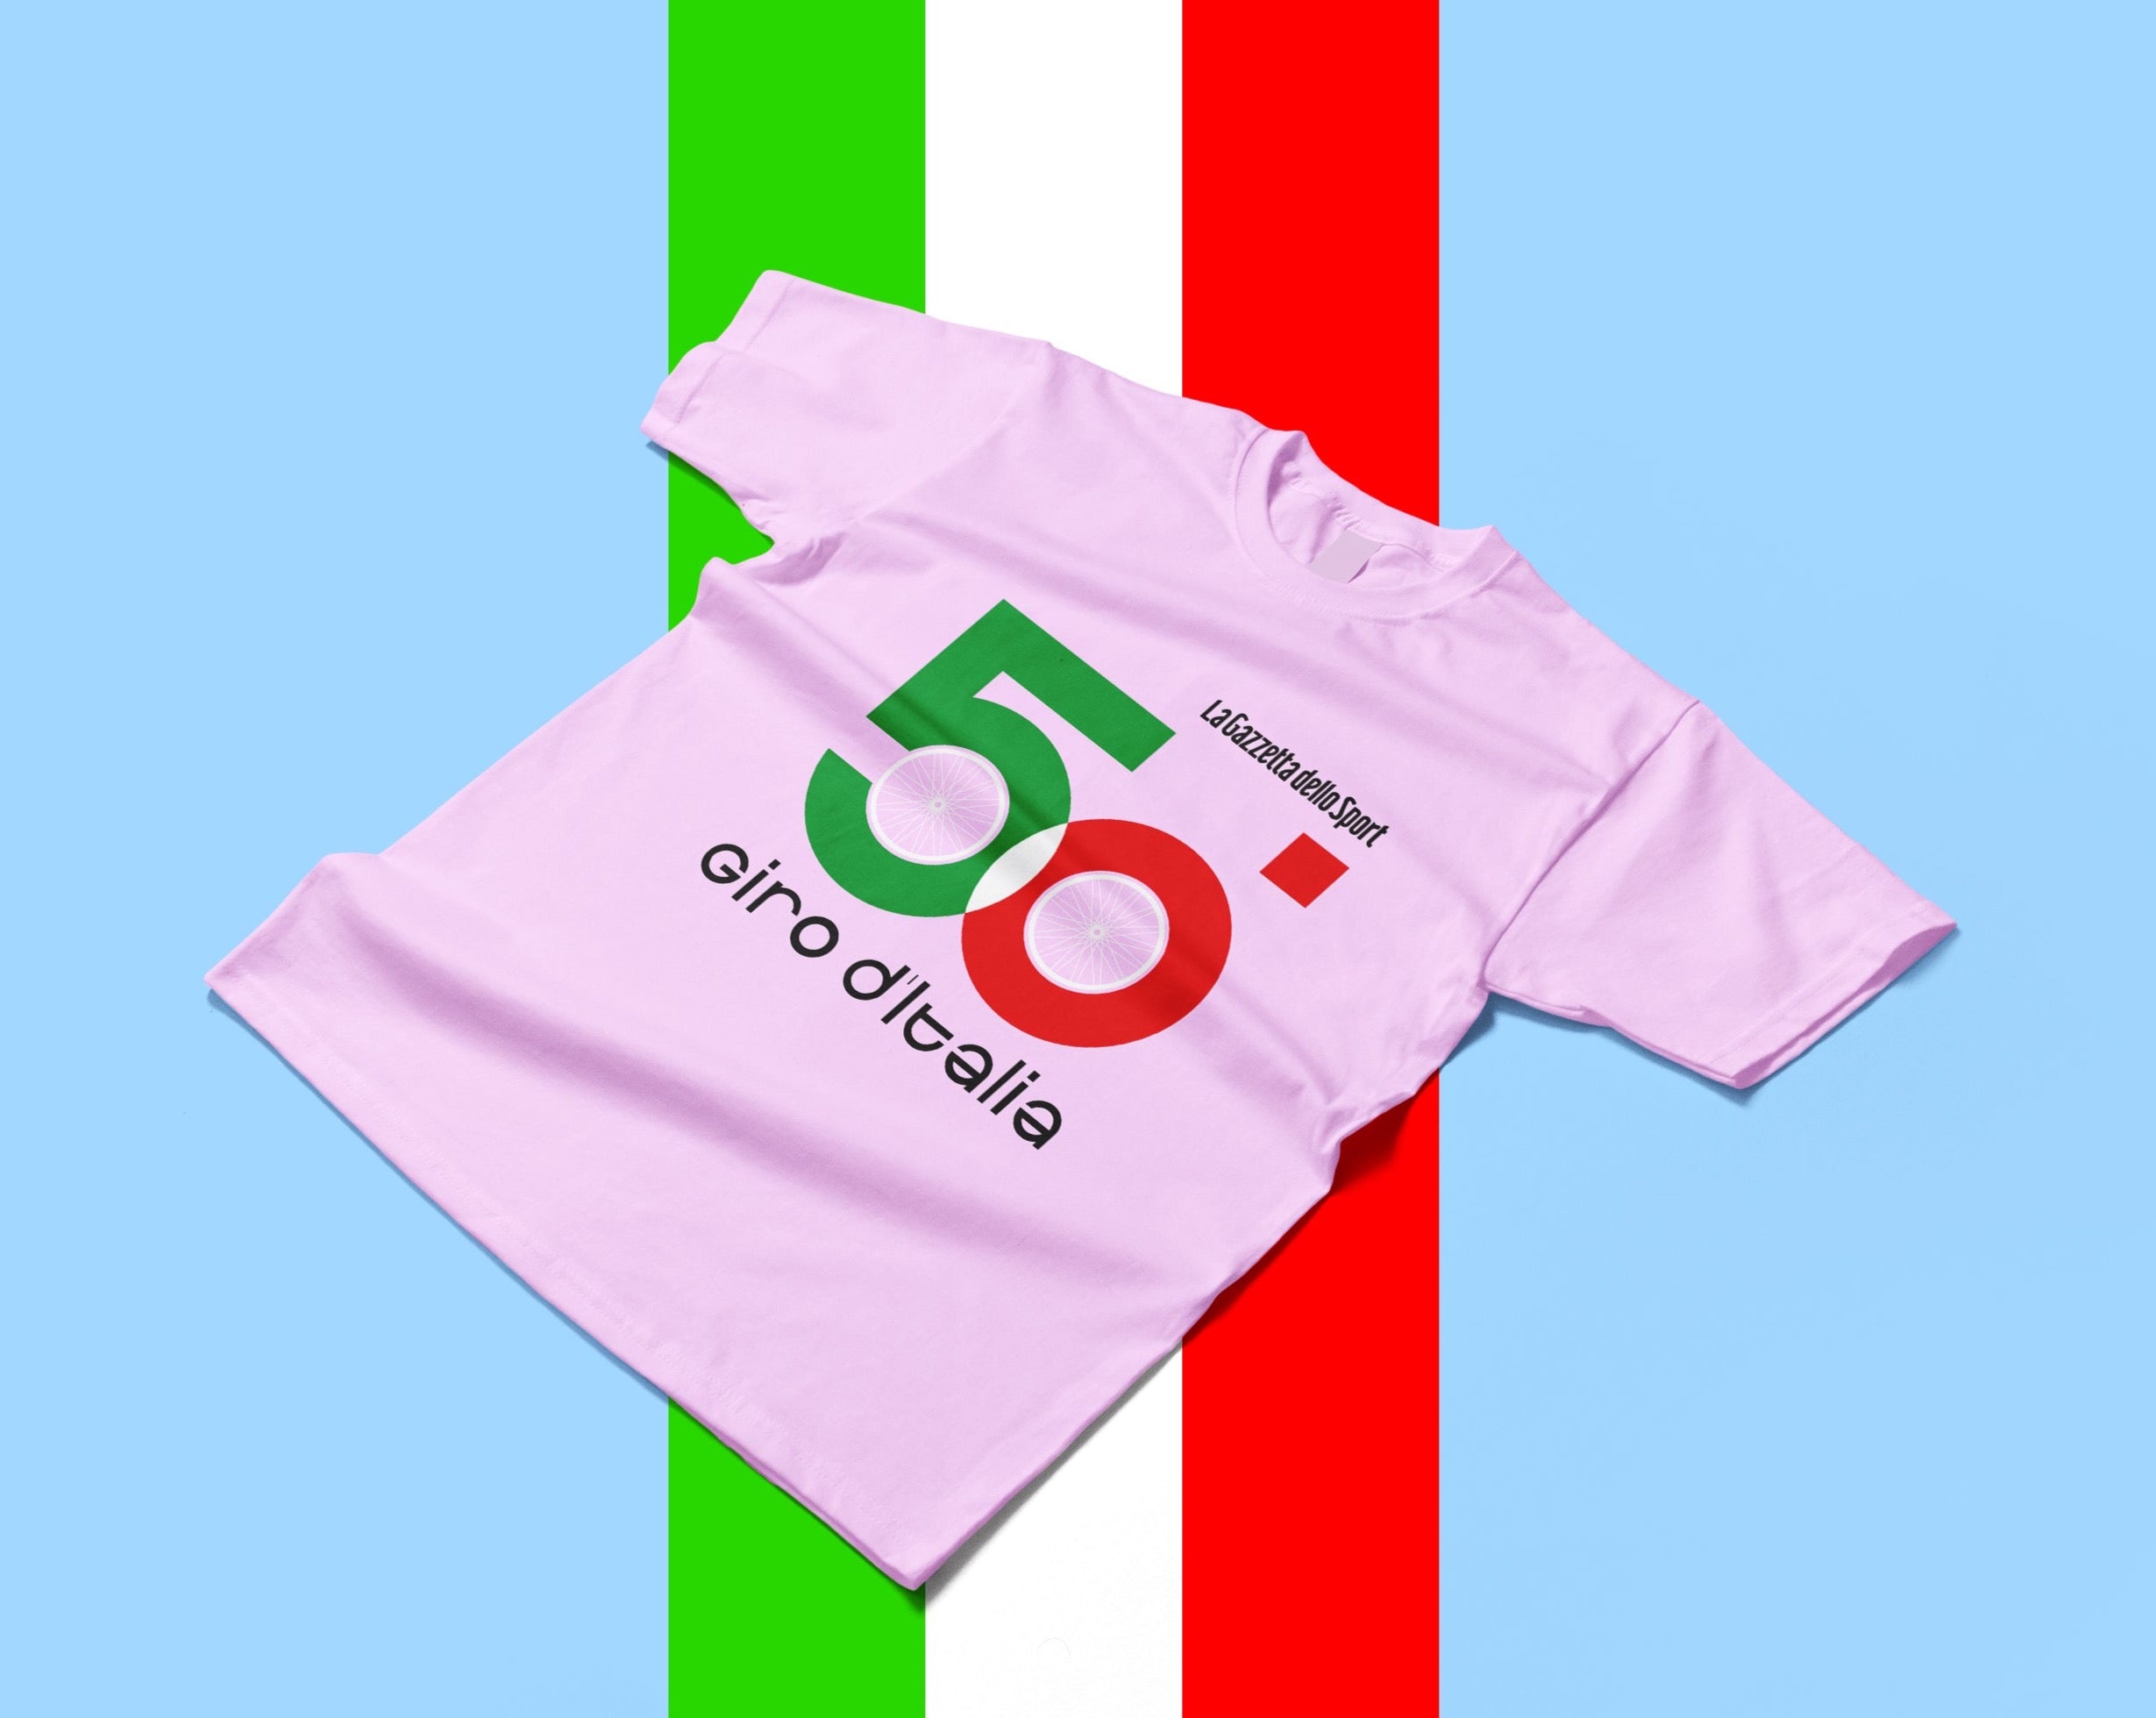 Giro d’Italia 50th Anniversary - Limited Edition T-Shirt.